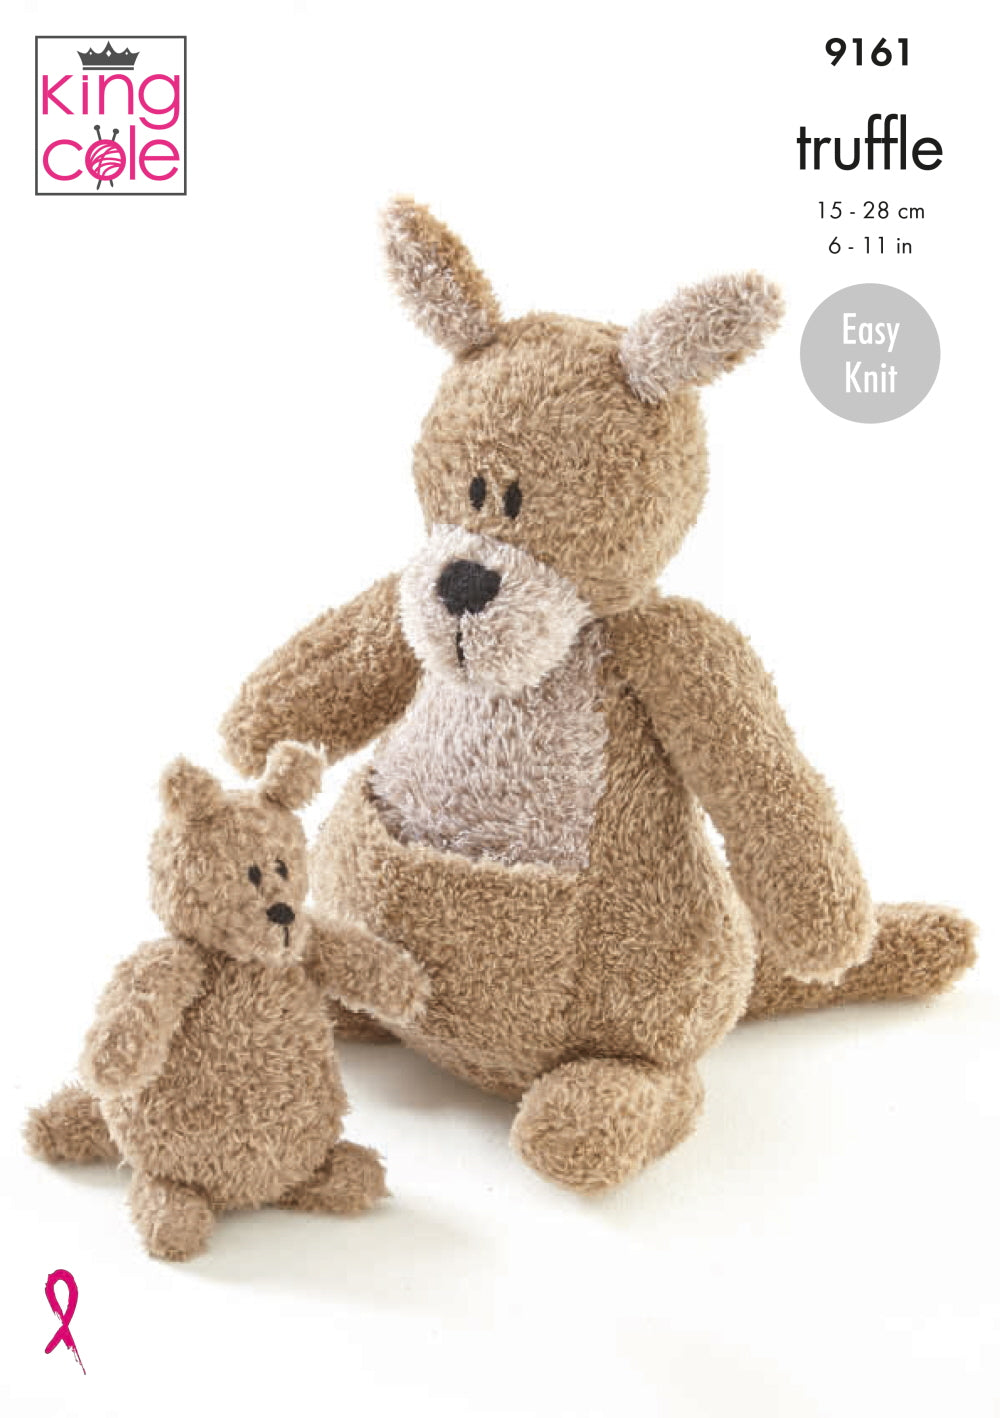 King Cole 9161 Kangaroo Joey Teddy Knitting Pattern